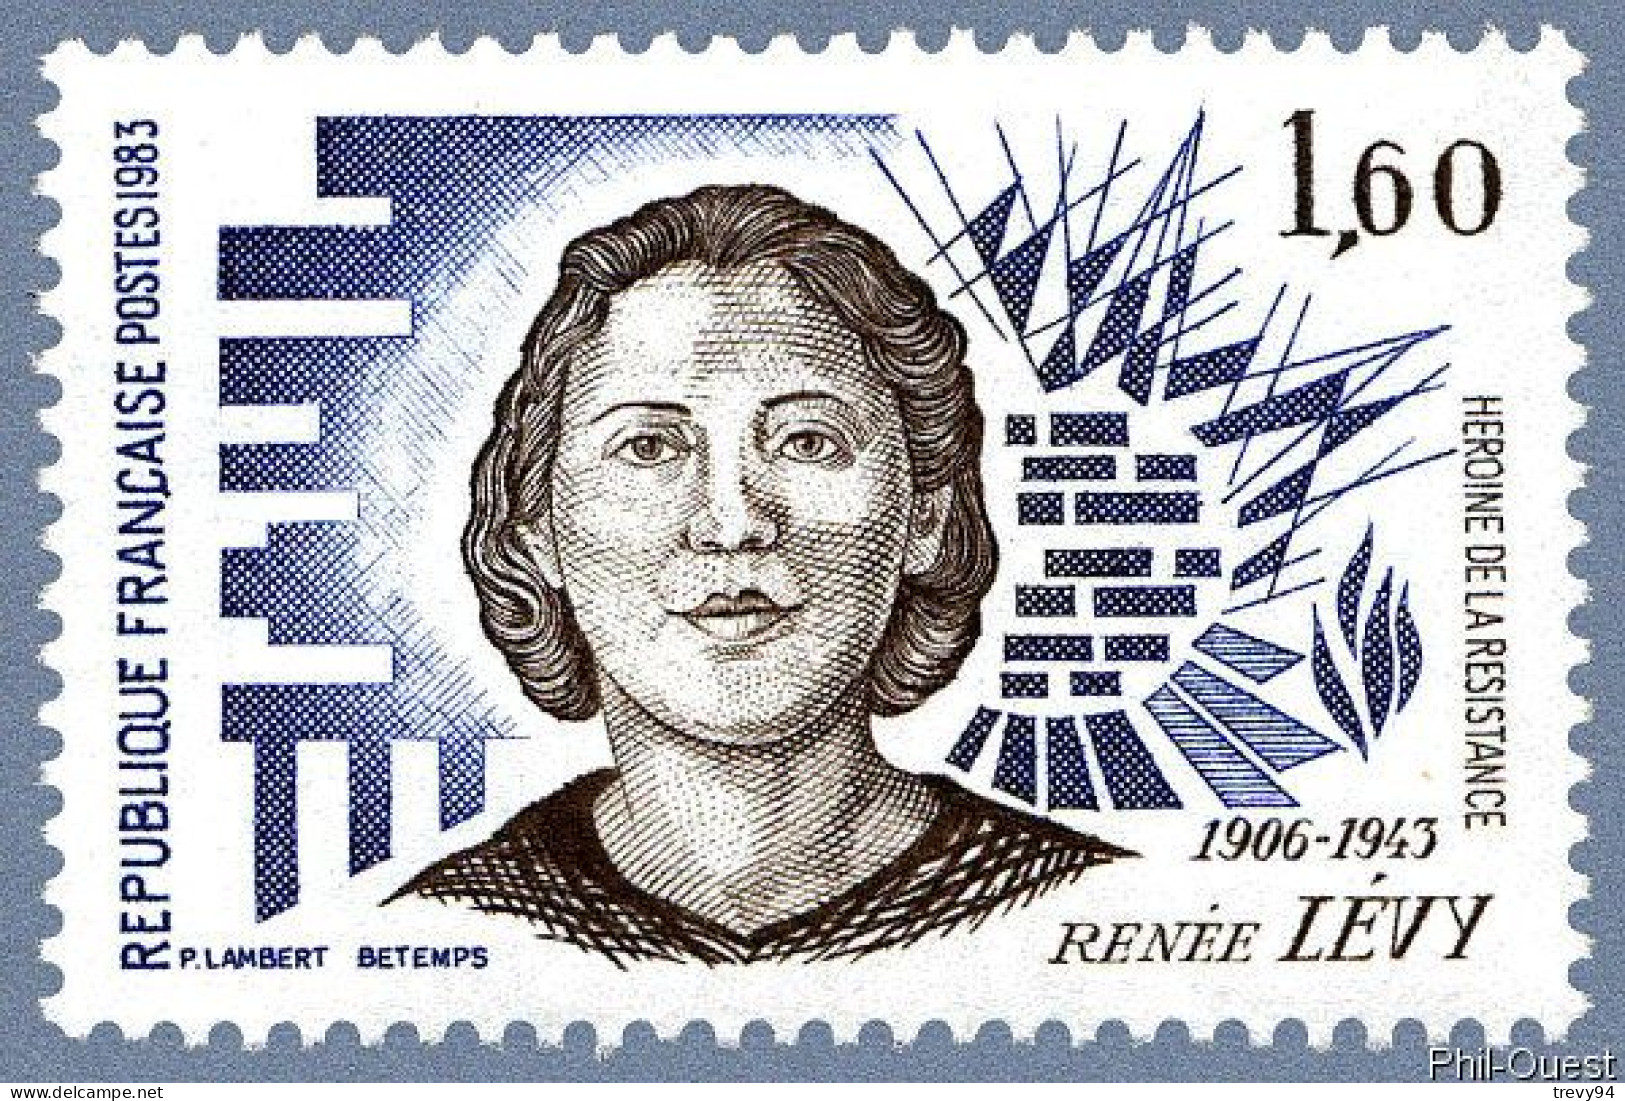 Timbre De 1983 - Héroïnes De La Résistance Renée Levy 1906-1943 - Yvert & Tellier N° 2293 - Ongebruikt